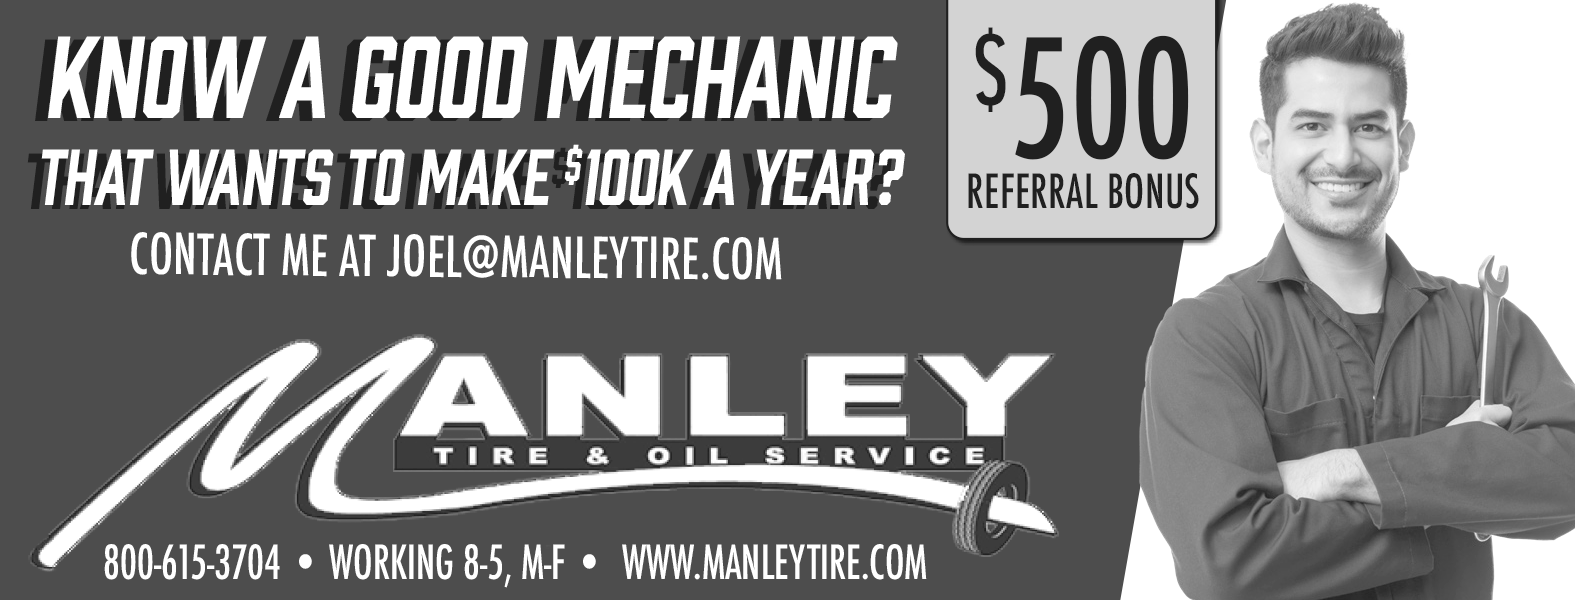 Manley Tire - Mechanic